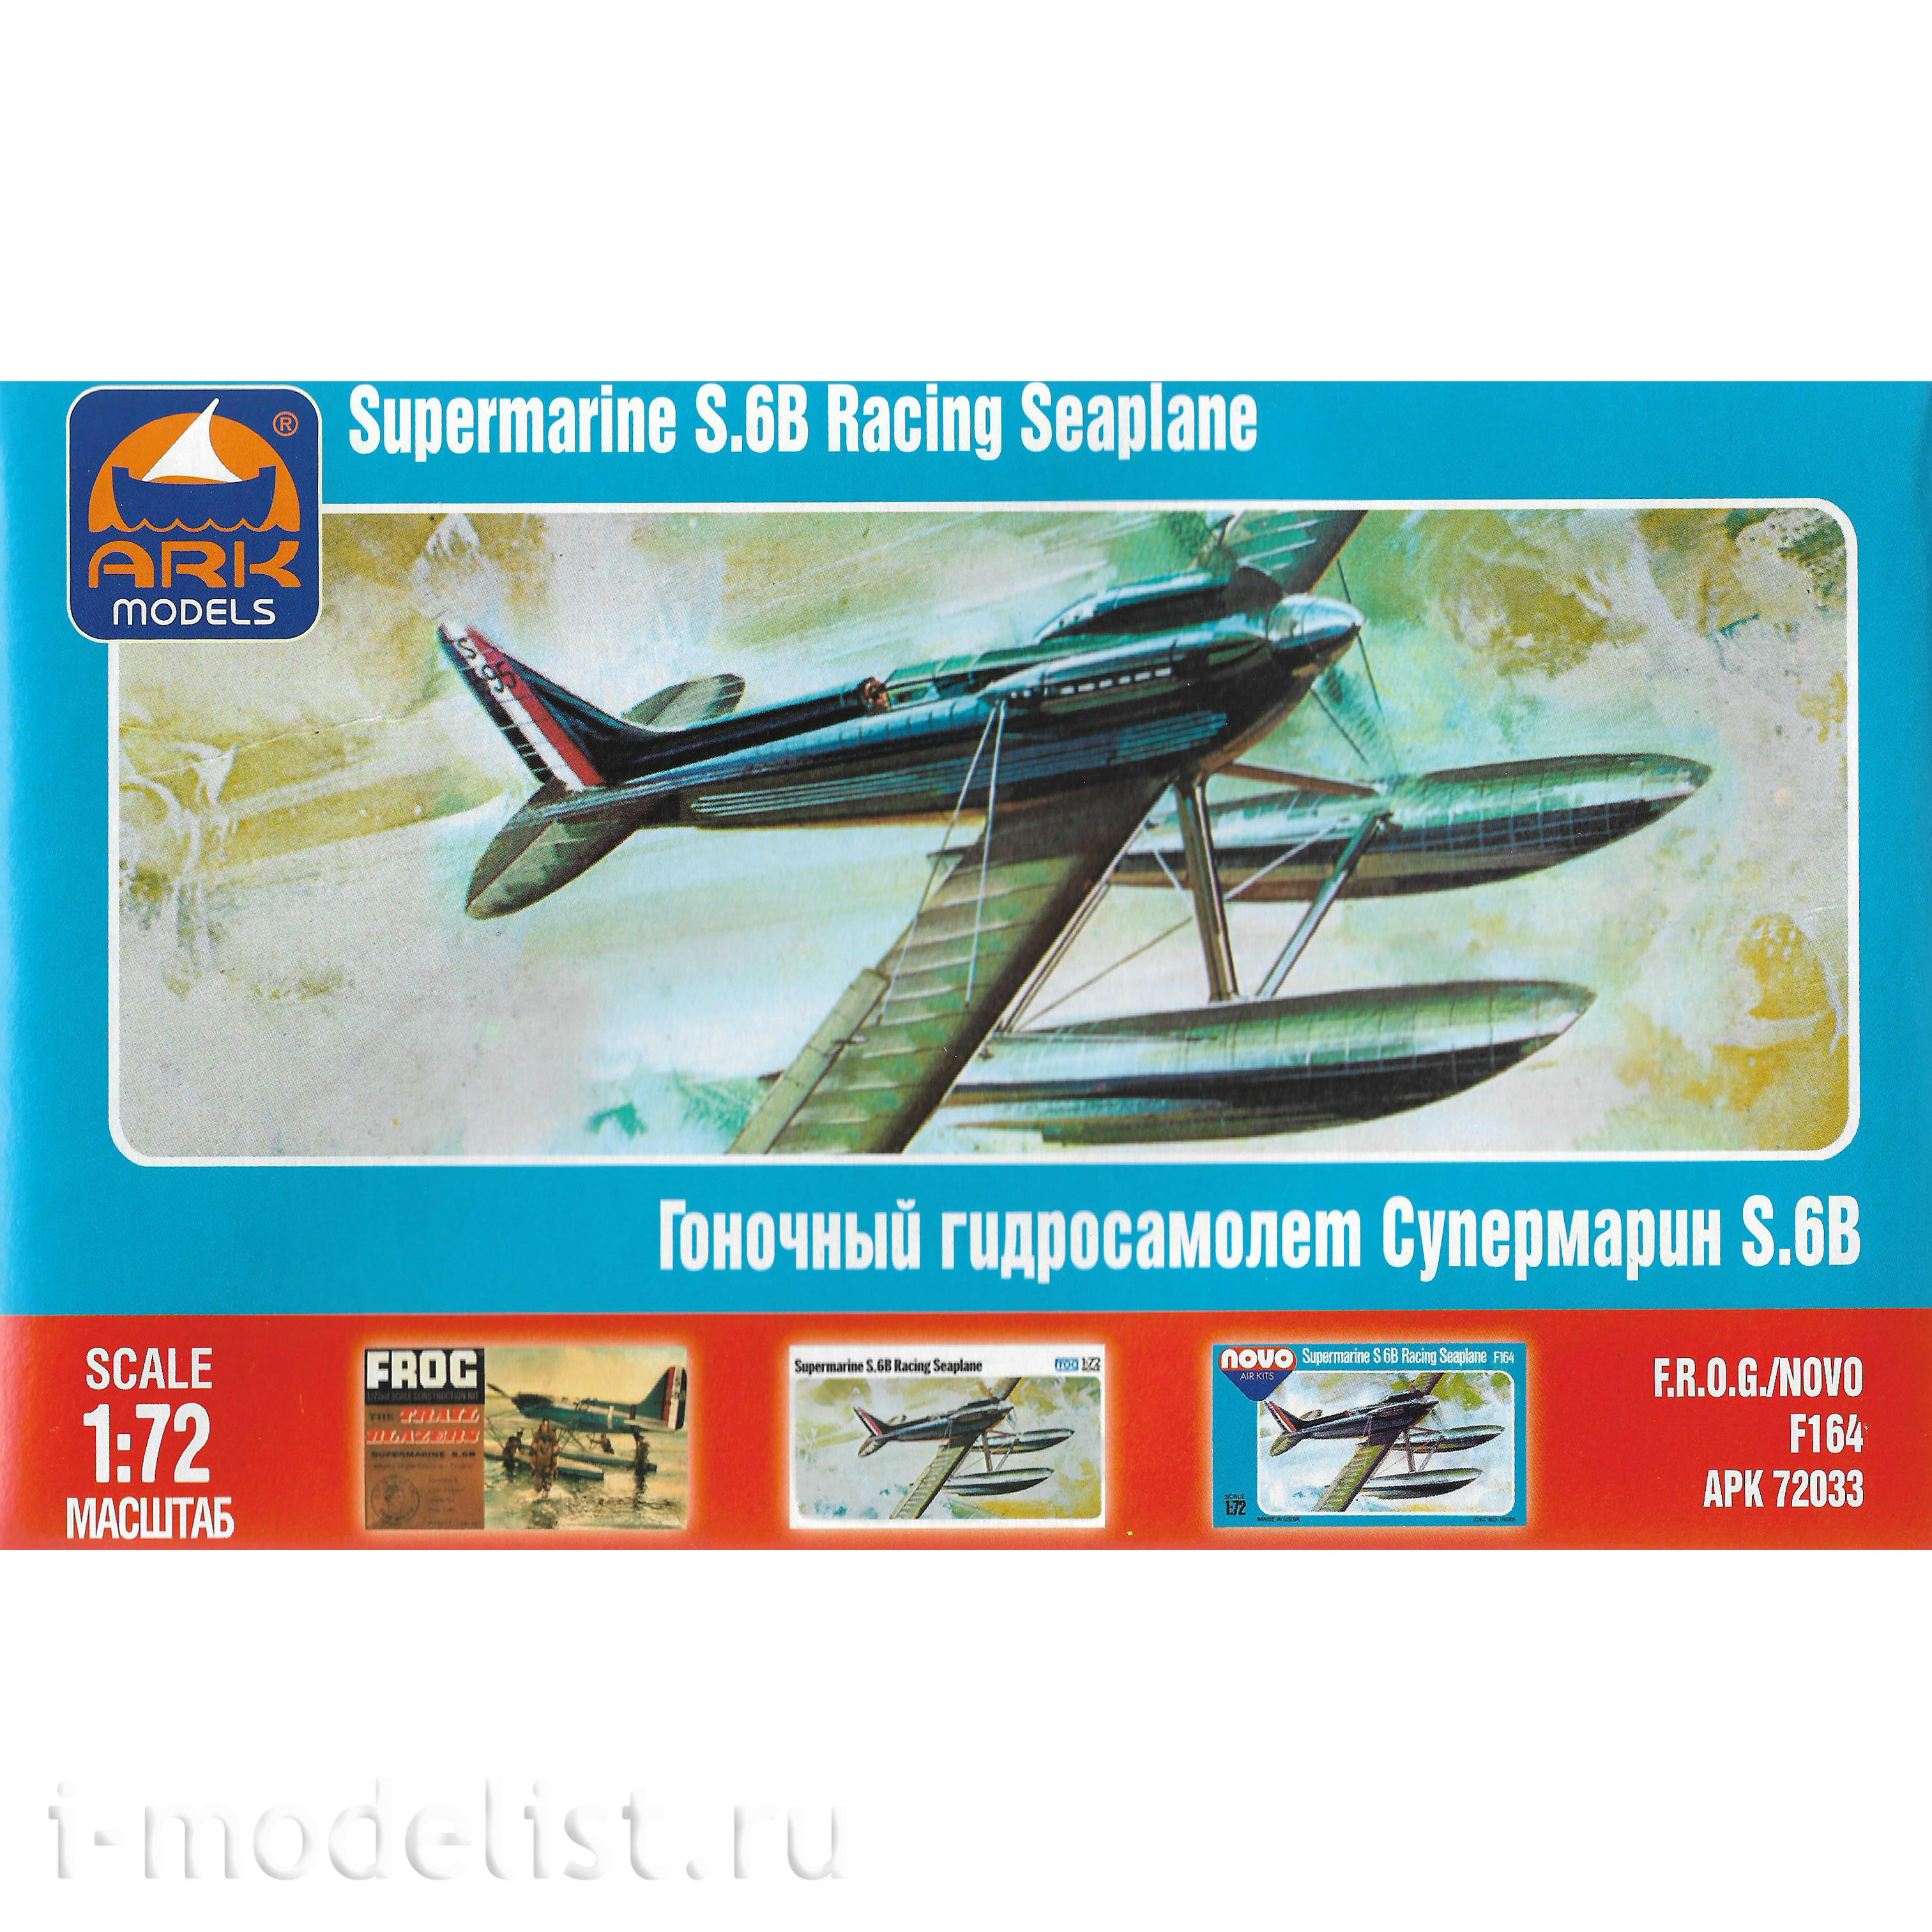 72033 Ark-models 1/72 Supermarine Racing seaplane”